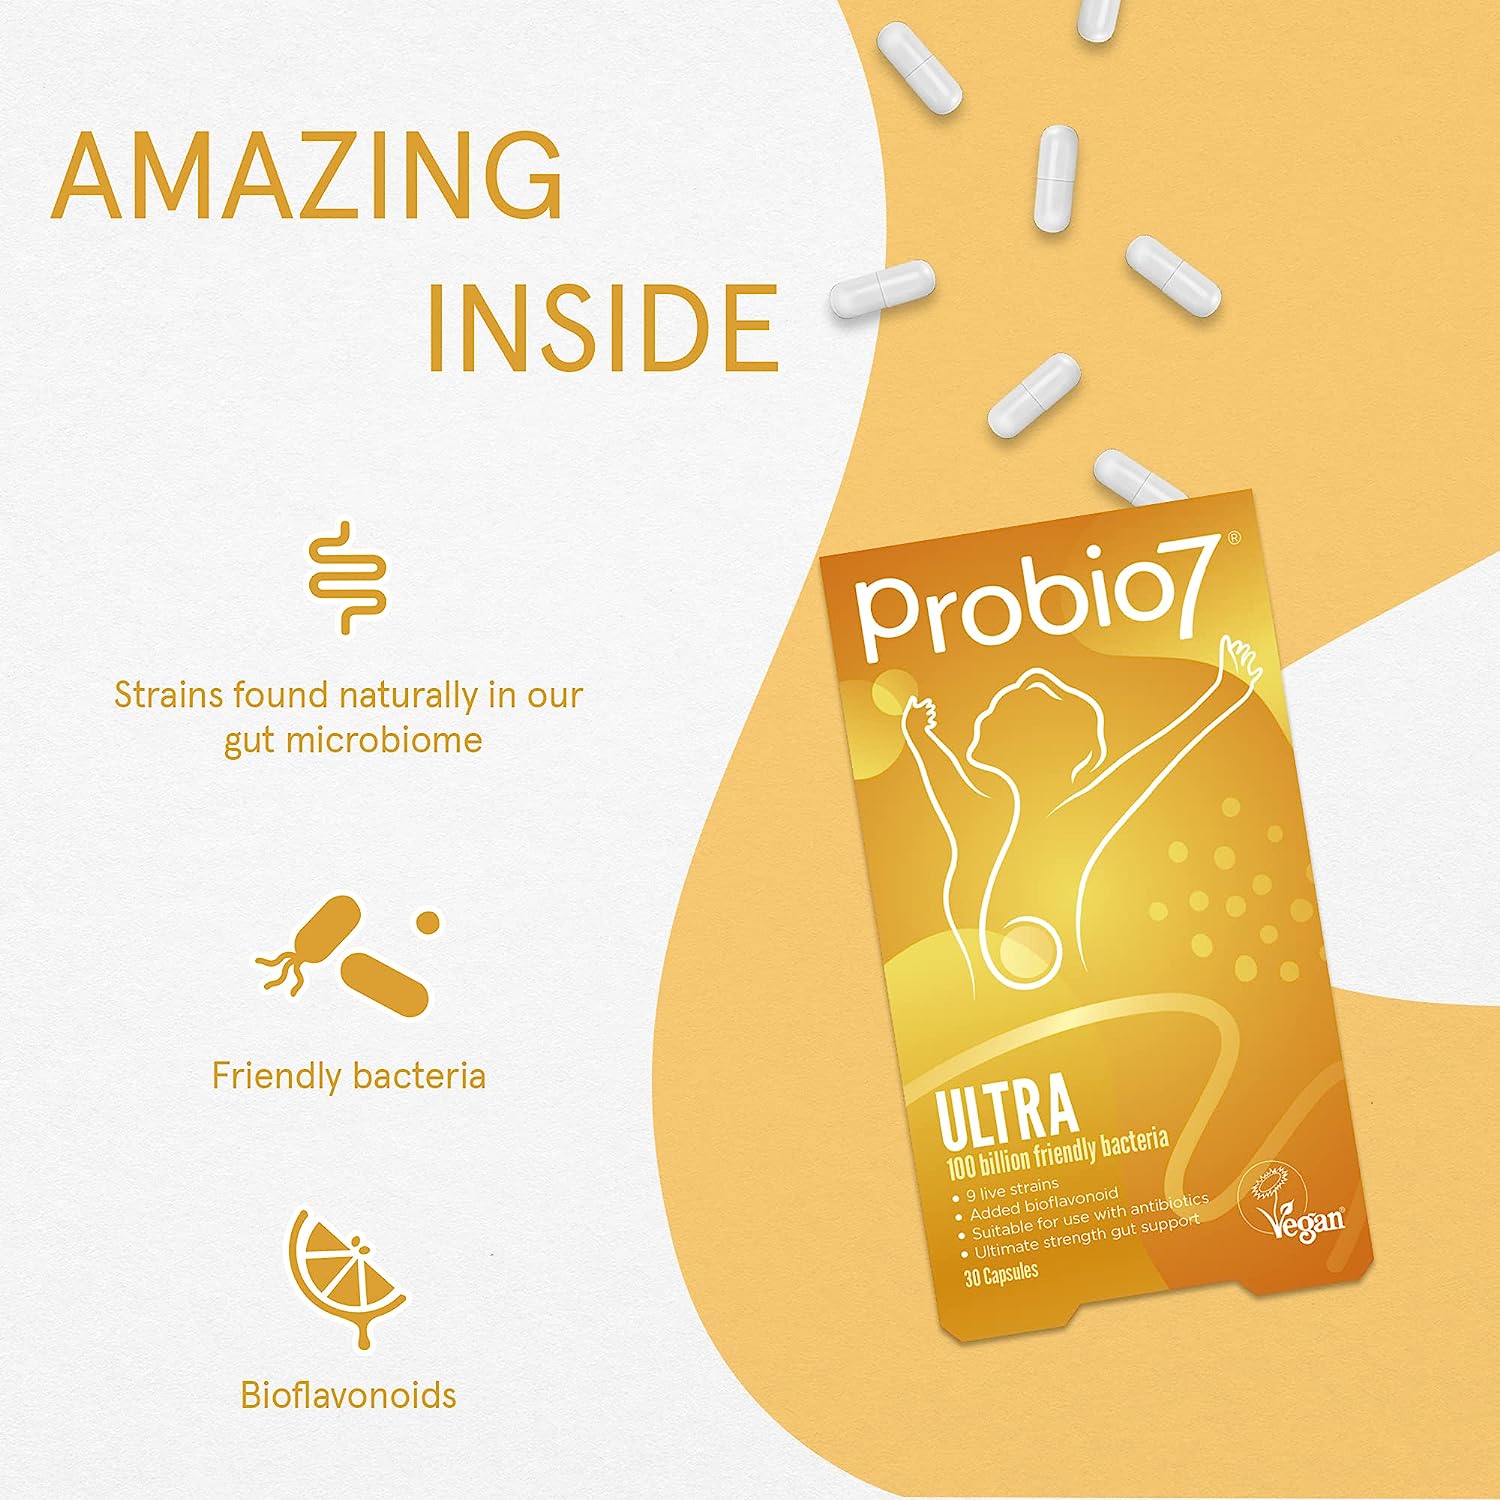 Probio7 ULTRA Probiotics 100 billion 9 Live Strains with added bioflavonoid 30 Vegan Capsules